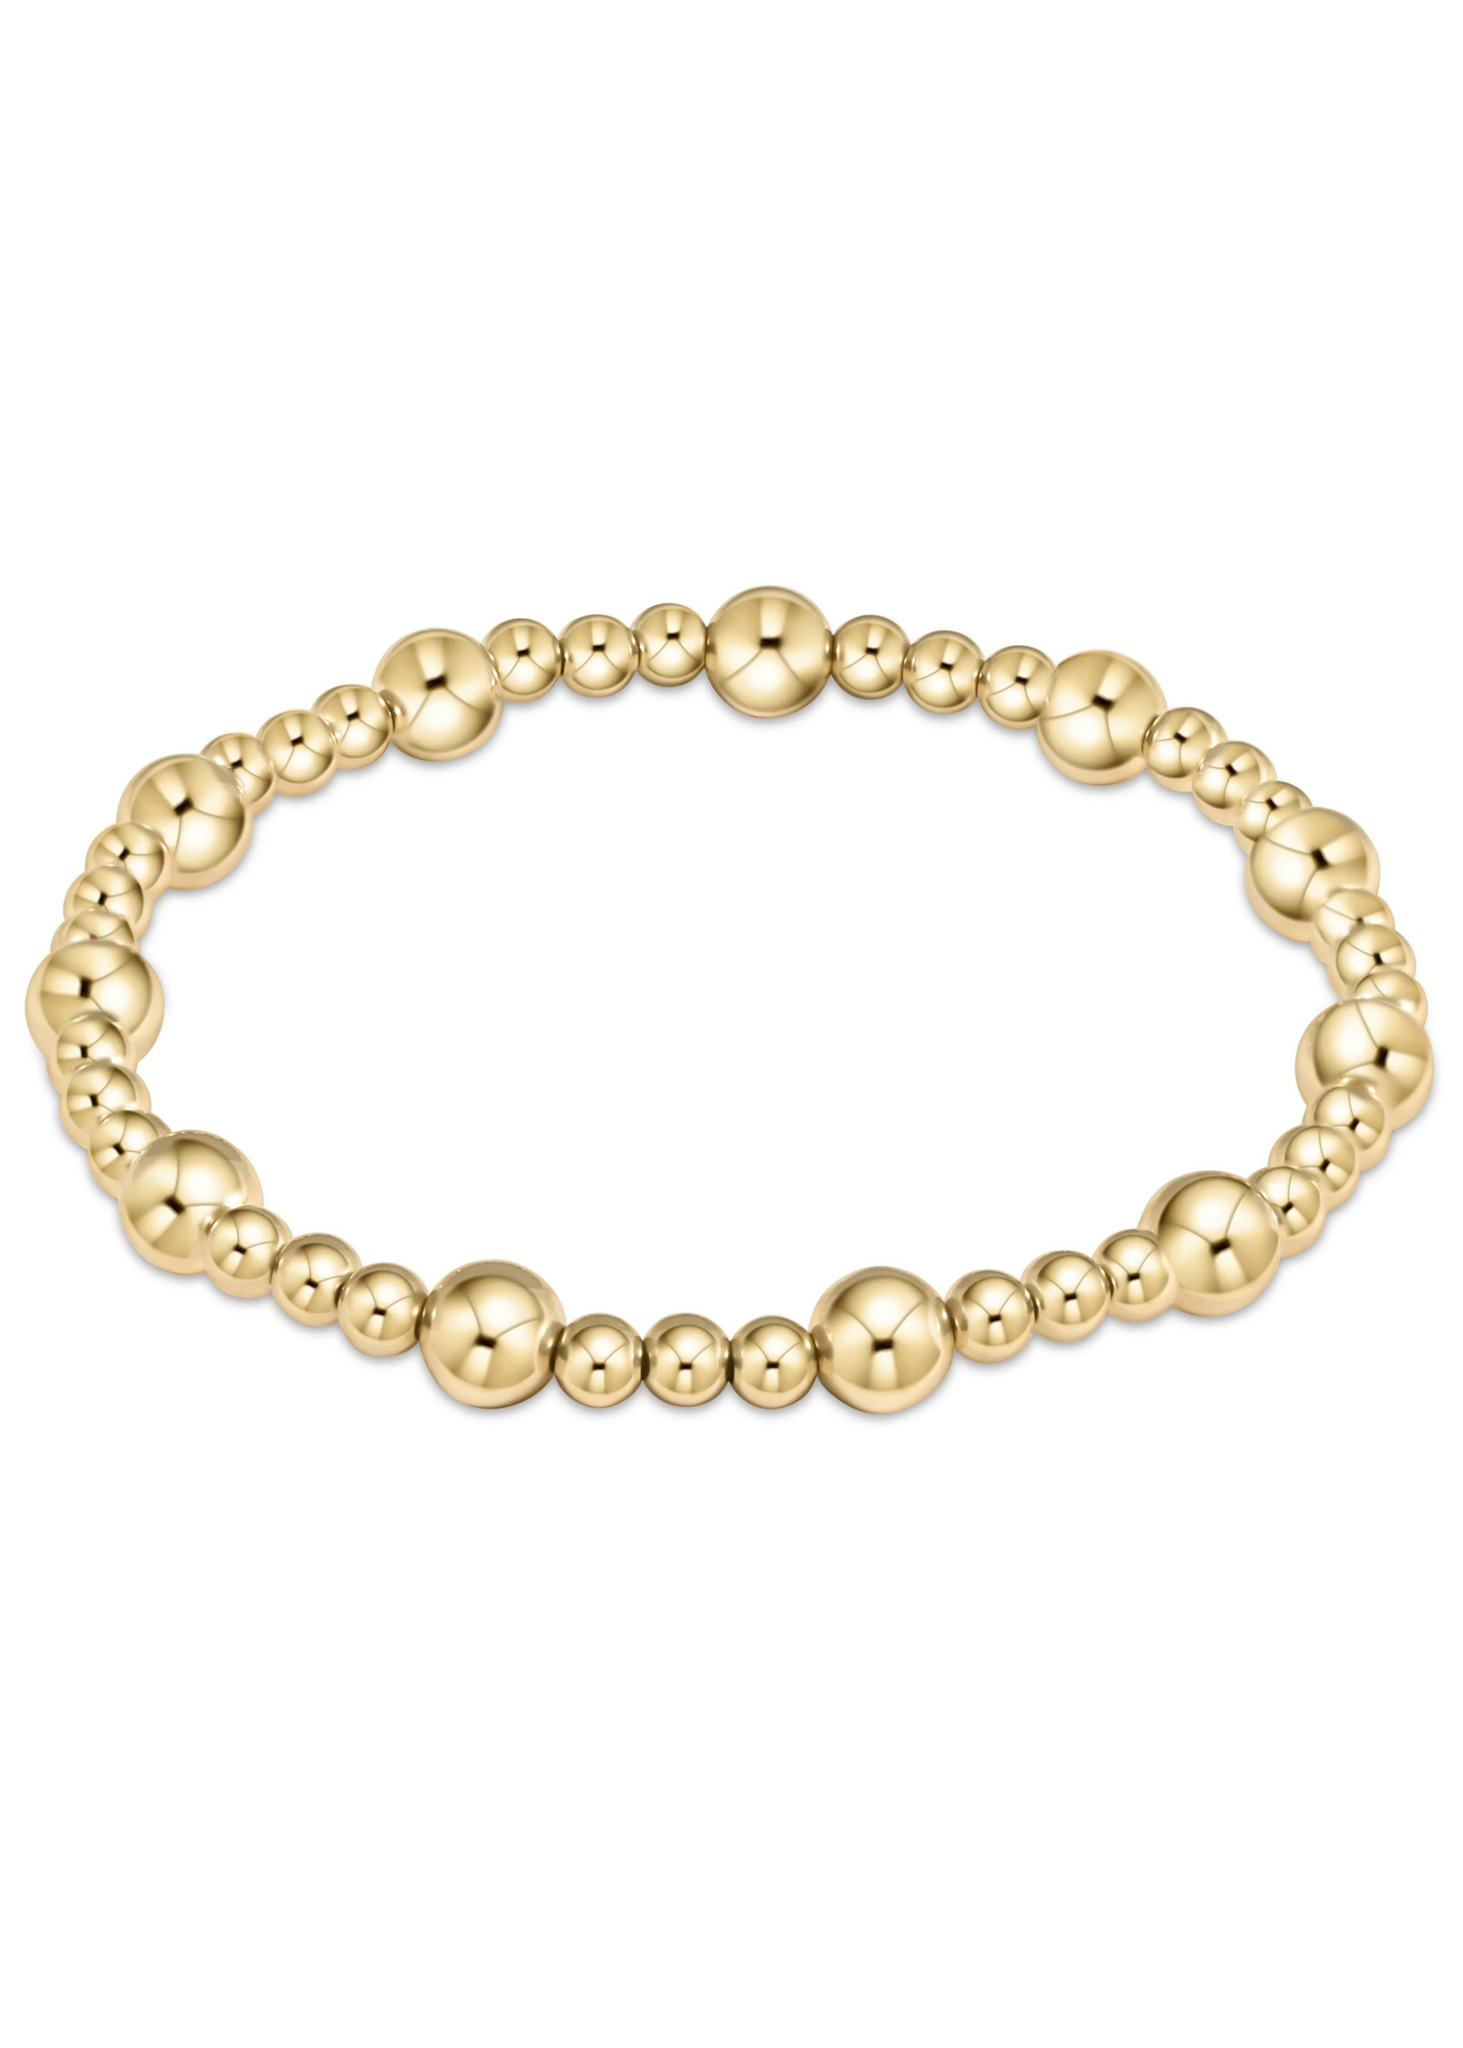 Classic Sincerity Pattern 6mm Bead Bracelet - Gold